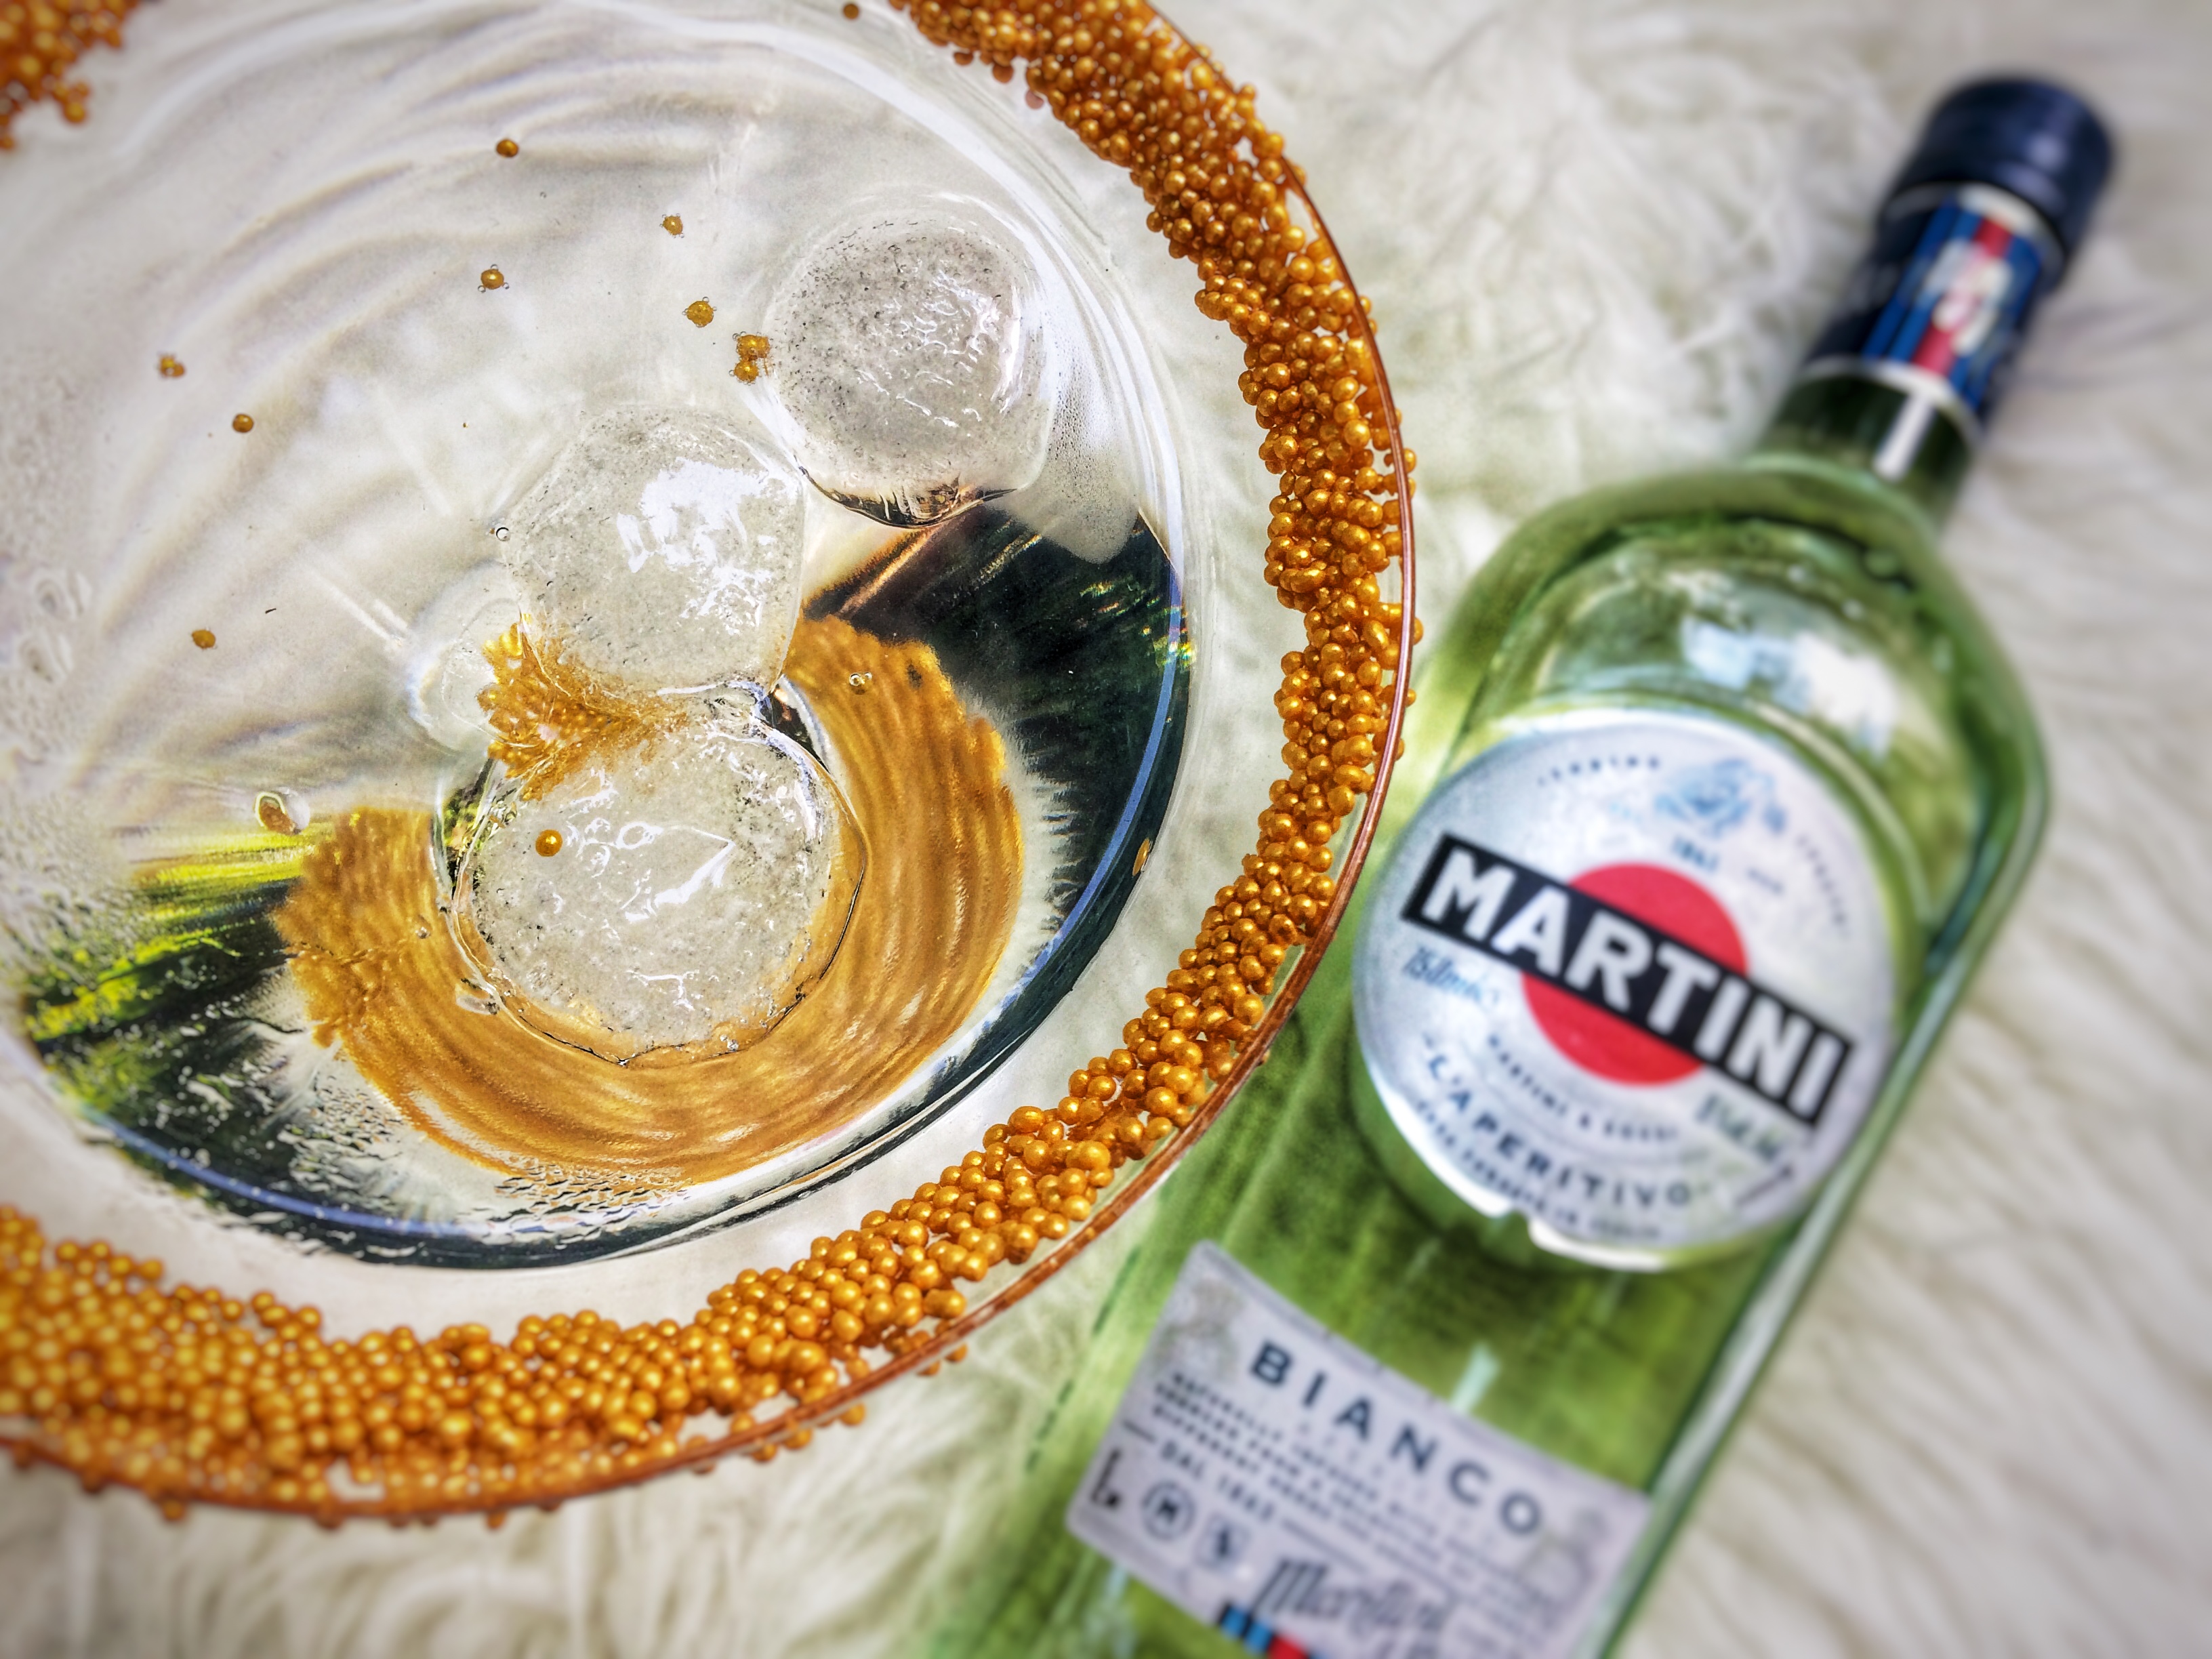 martini1.jpg